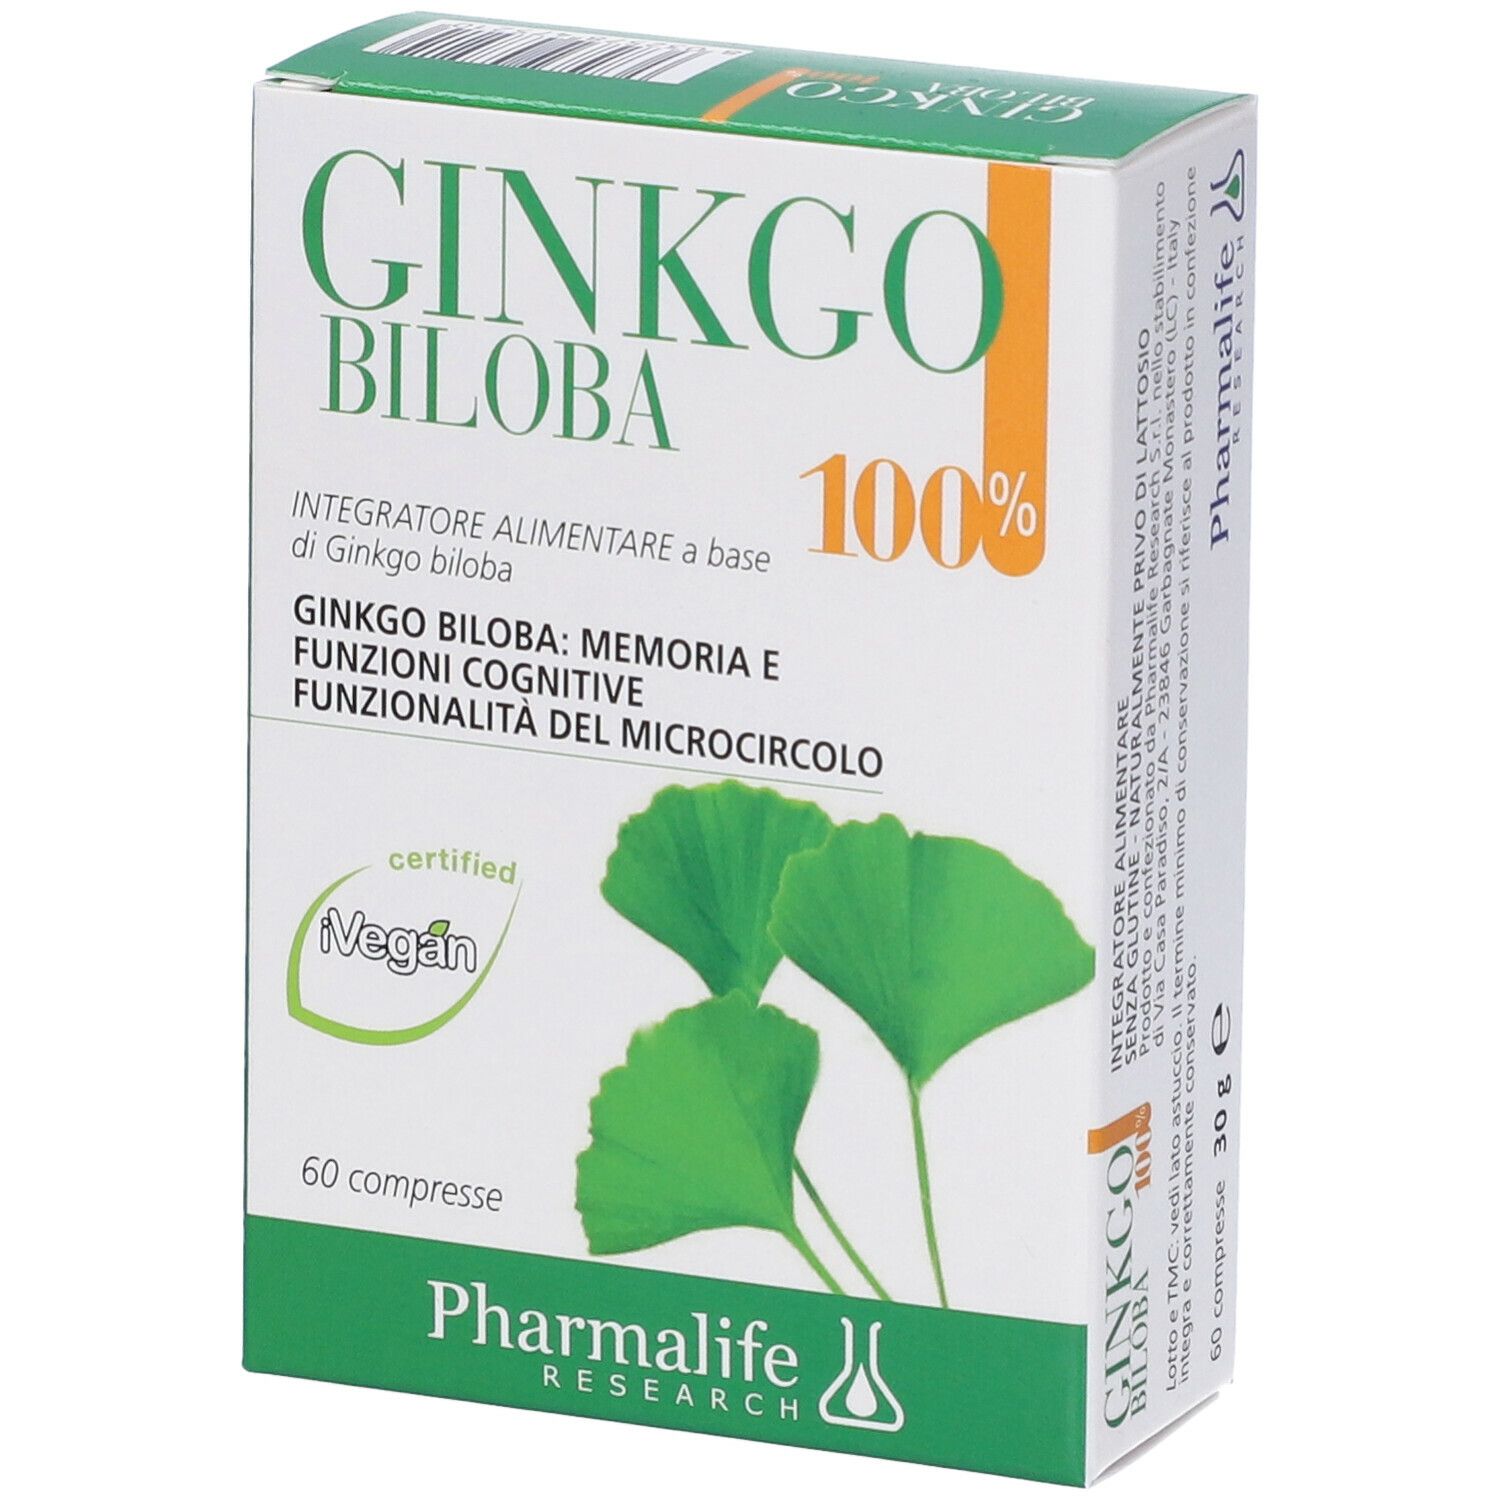 Image of Pharmalife Research Ginkgo Biloba 100% Compresse